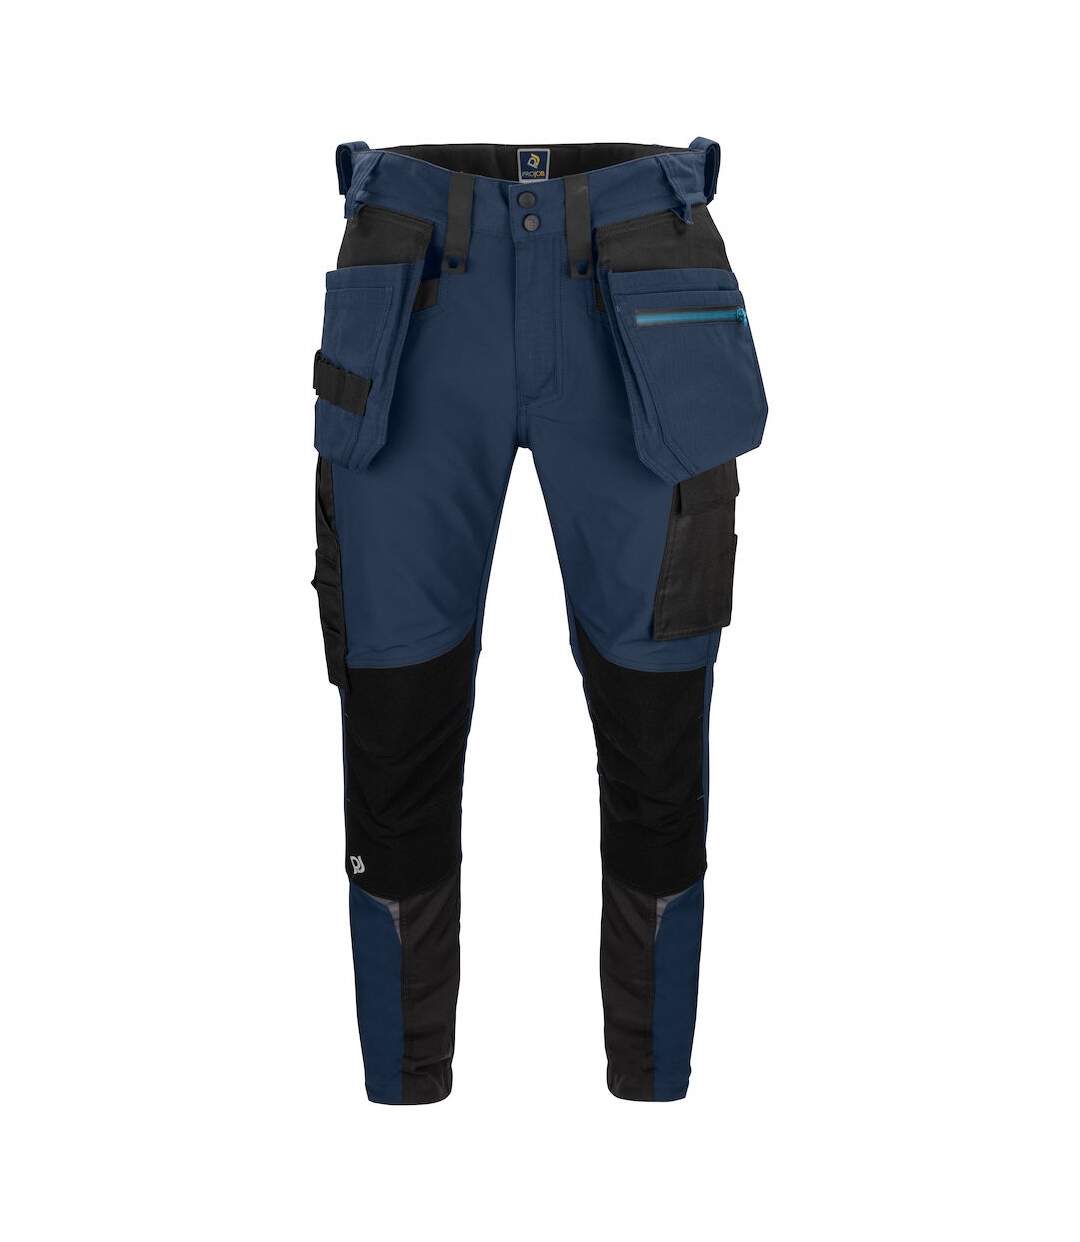 Projob - Pantalon - Homme (Bleu marine) - UTUB616